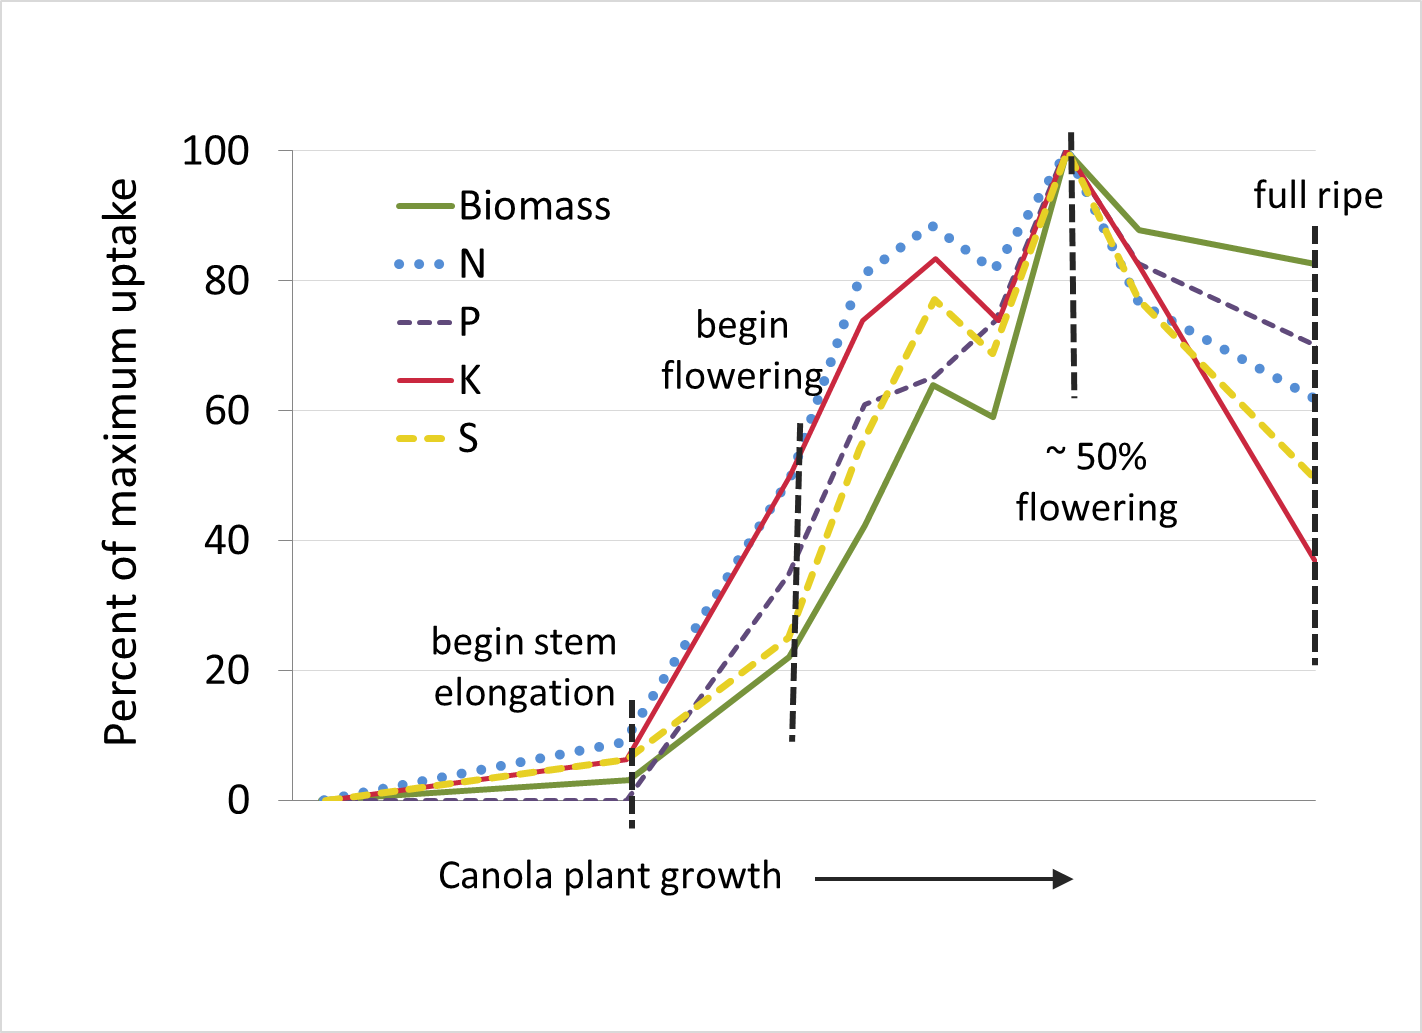 Canola: Uptake increases dramatically at stem elongation before reaching its maximum around 50% flowering before decreasing slightly before full ripe.